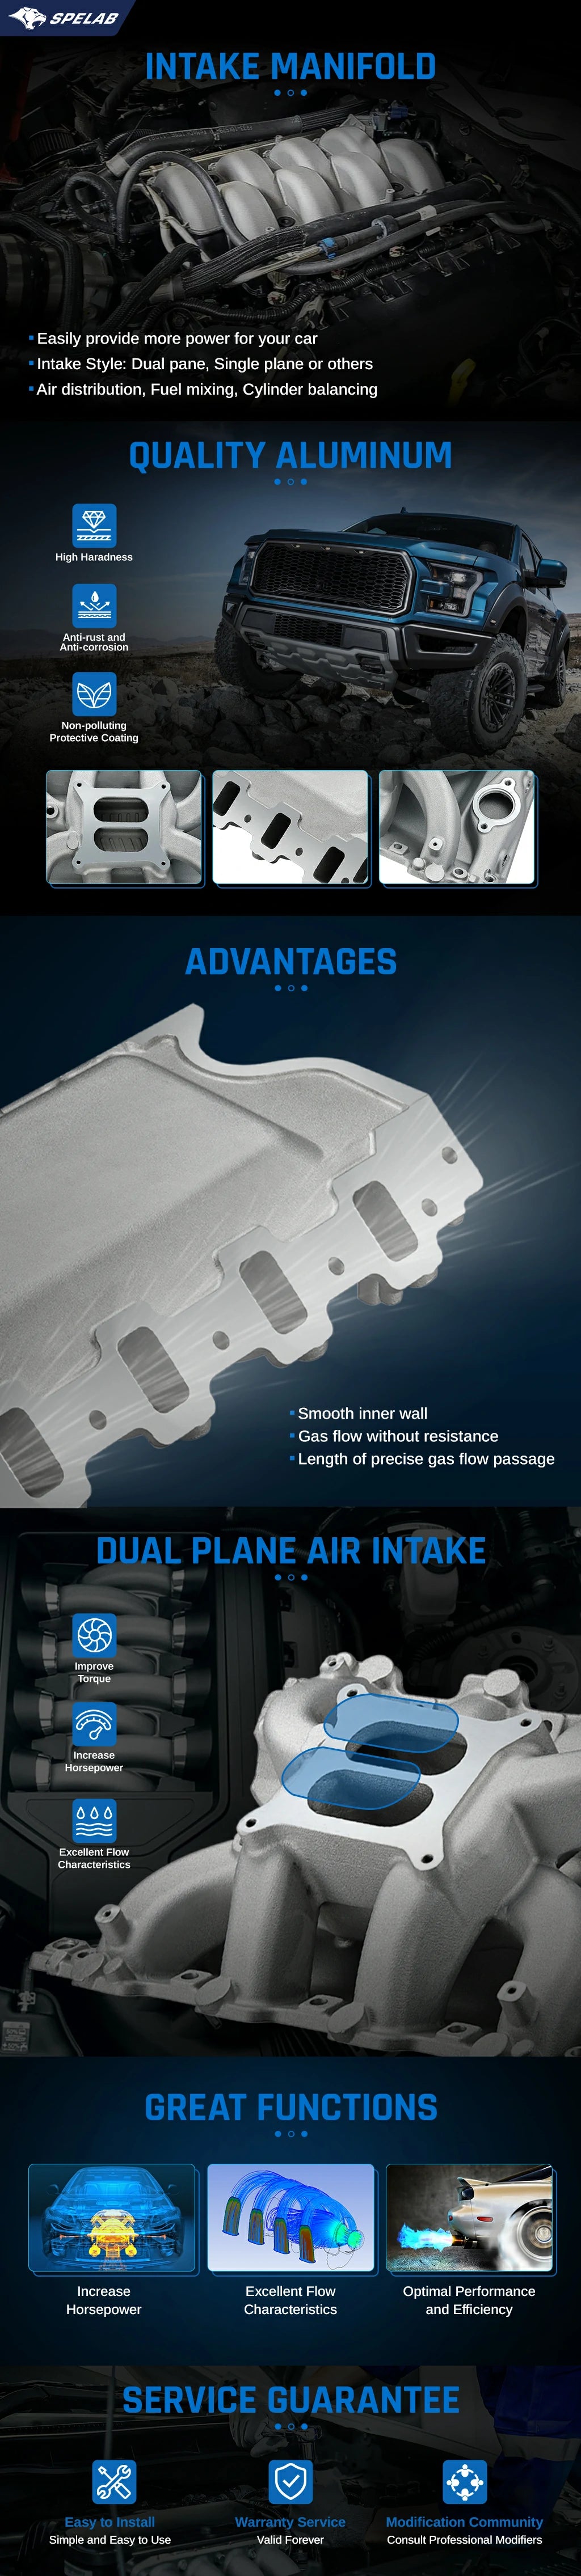 Intake Manifold For Chevy Small Block Vortec Dual Plane | SPELAB-26